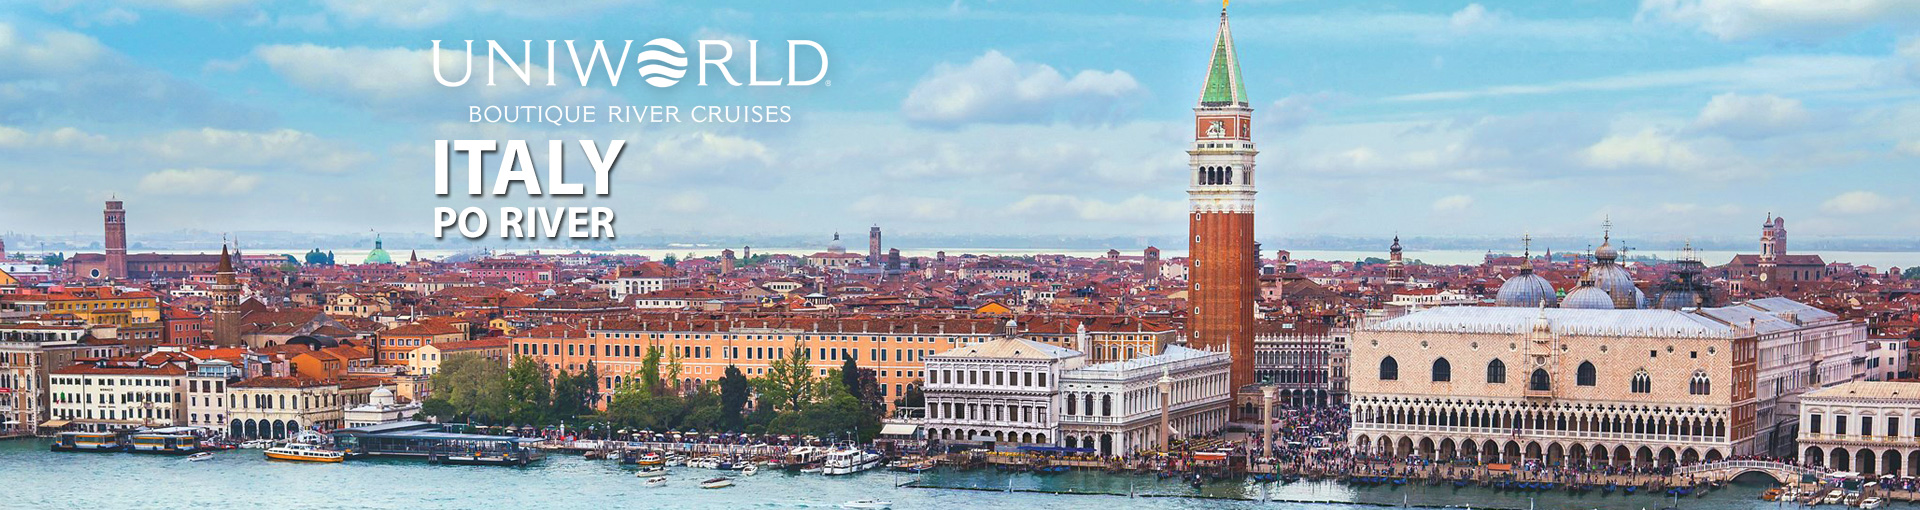 Uniworld River Cruises along Italy's Po River